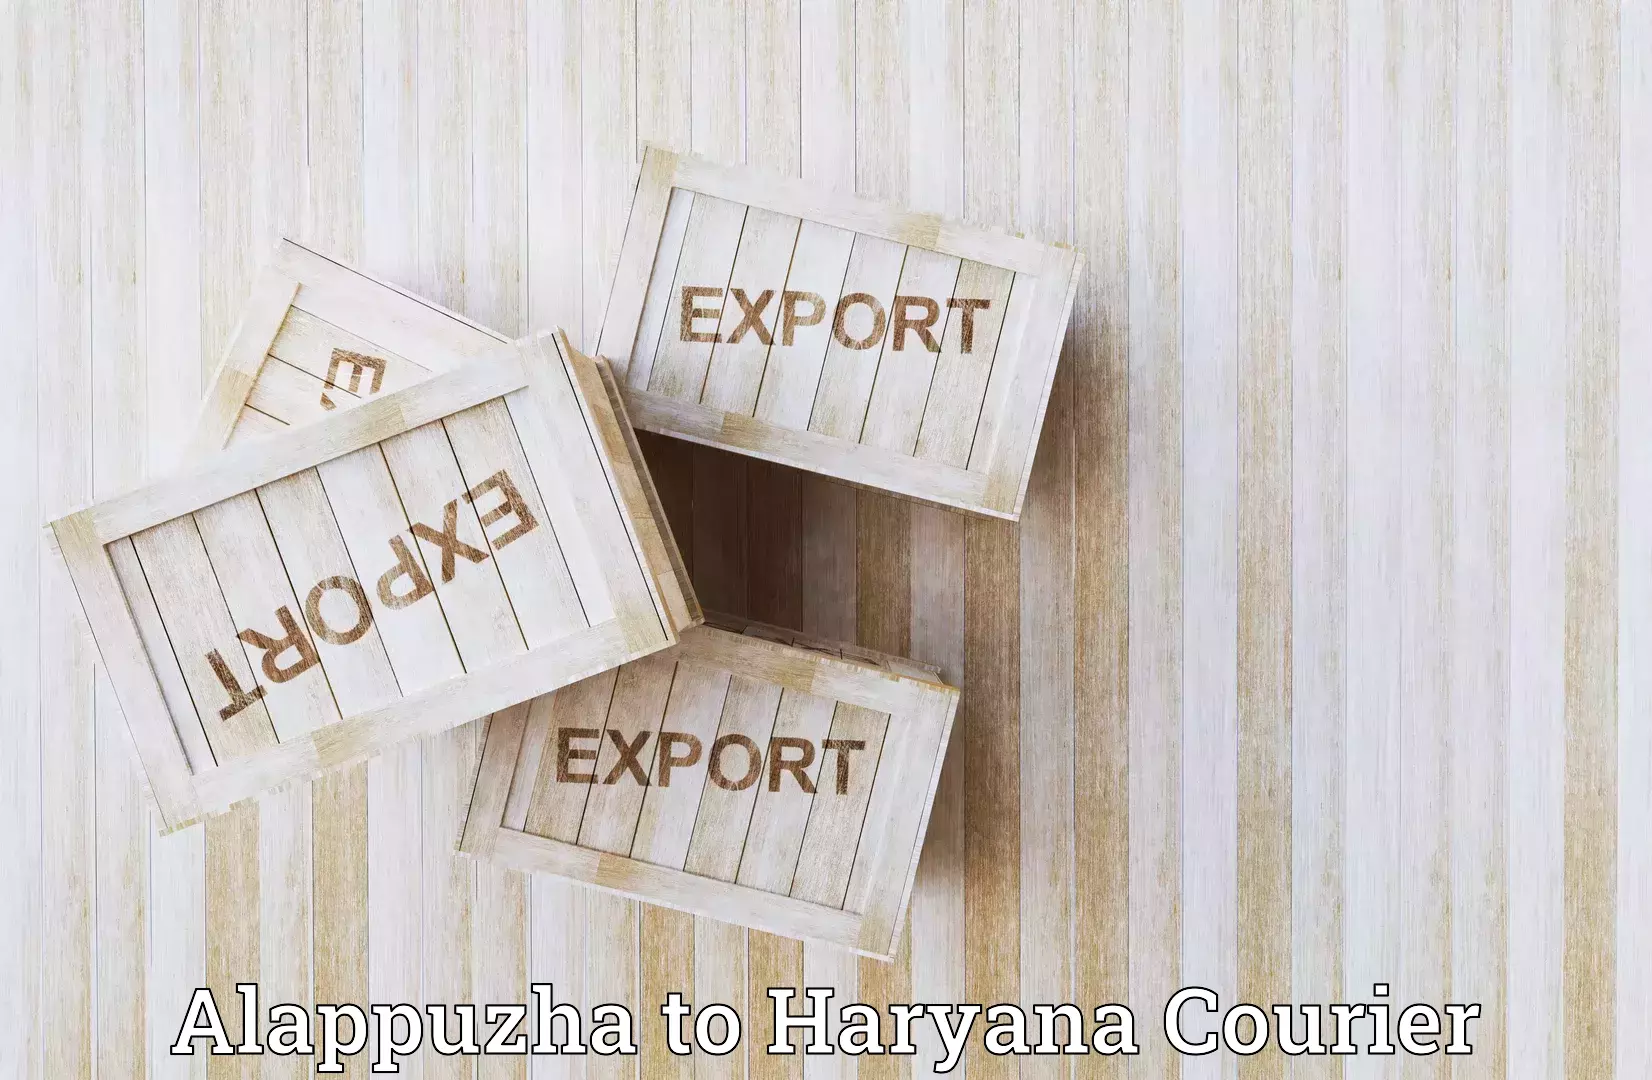 Courier service comparison Alappuzha to Panipat